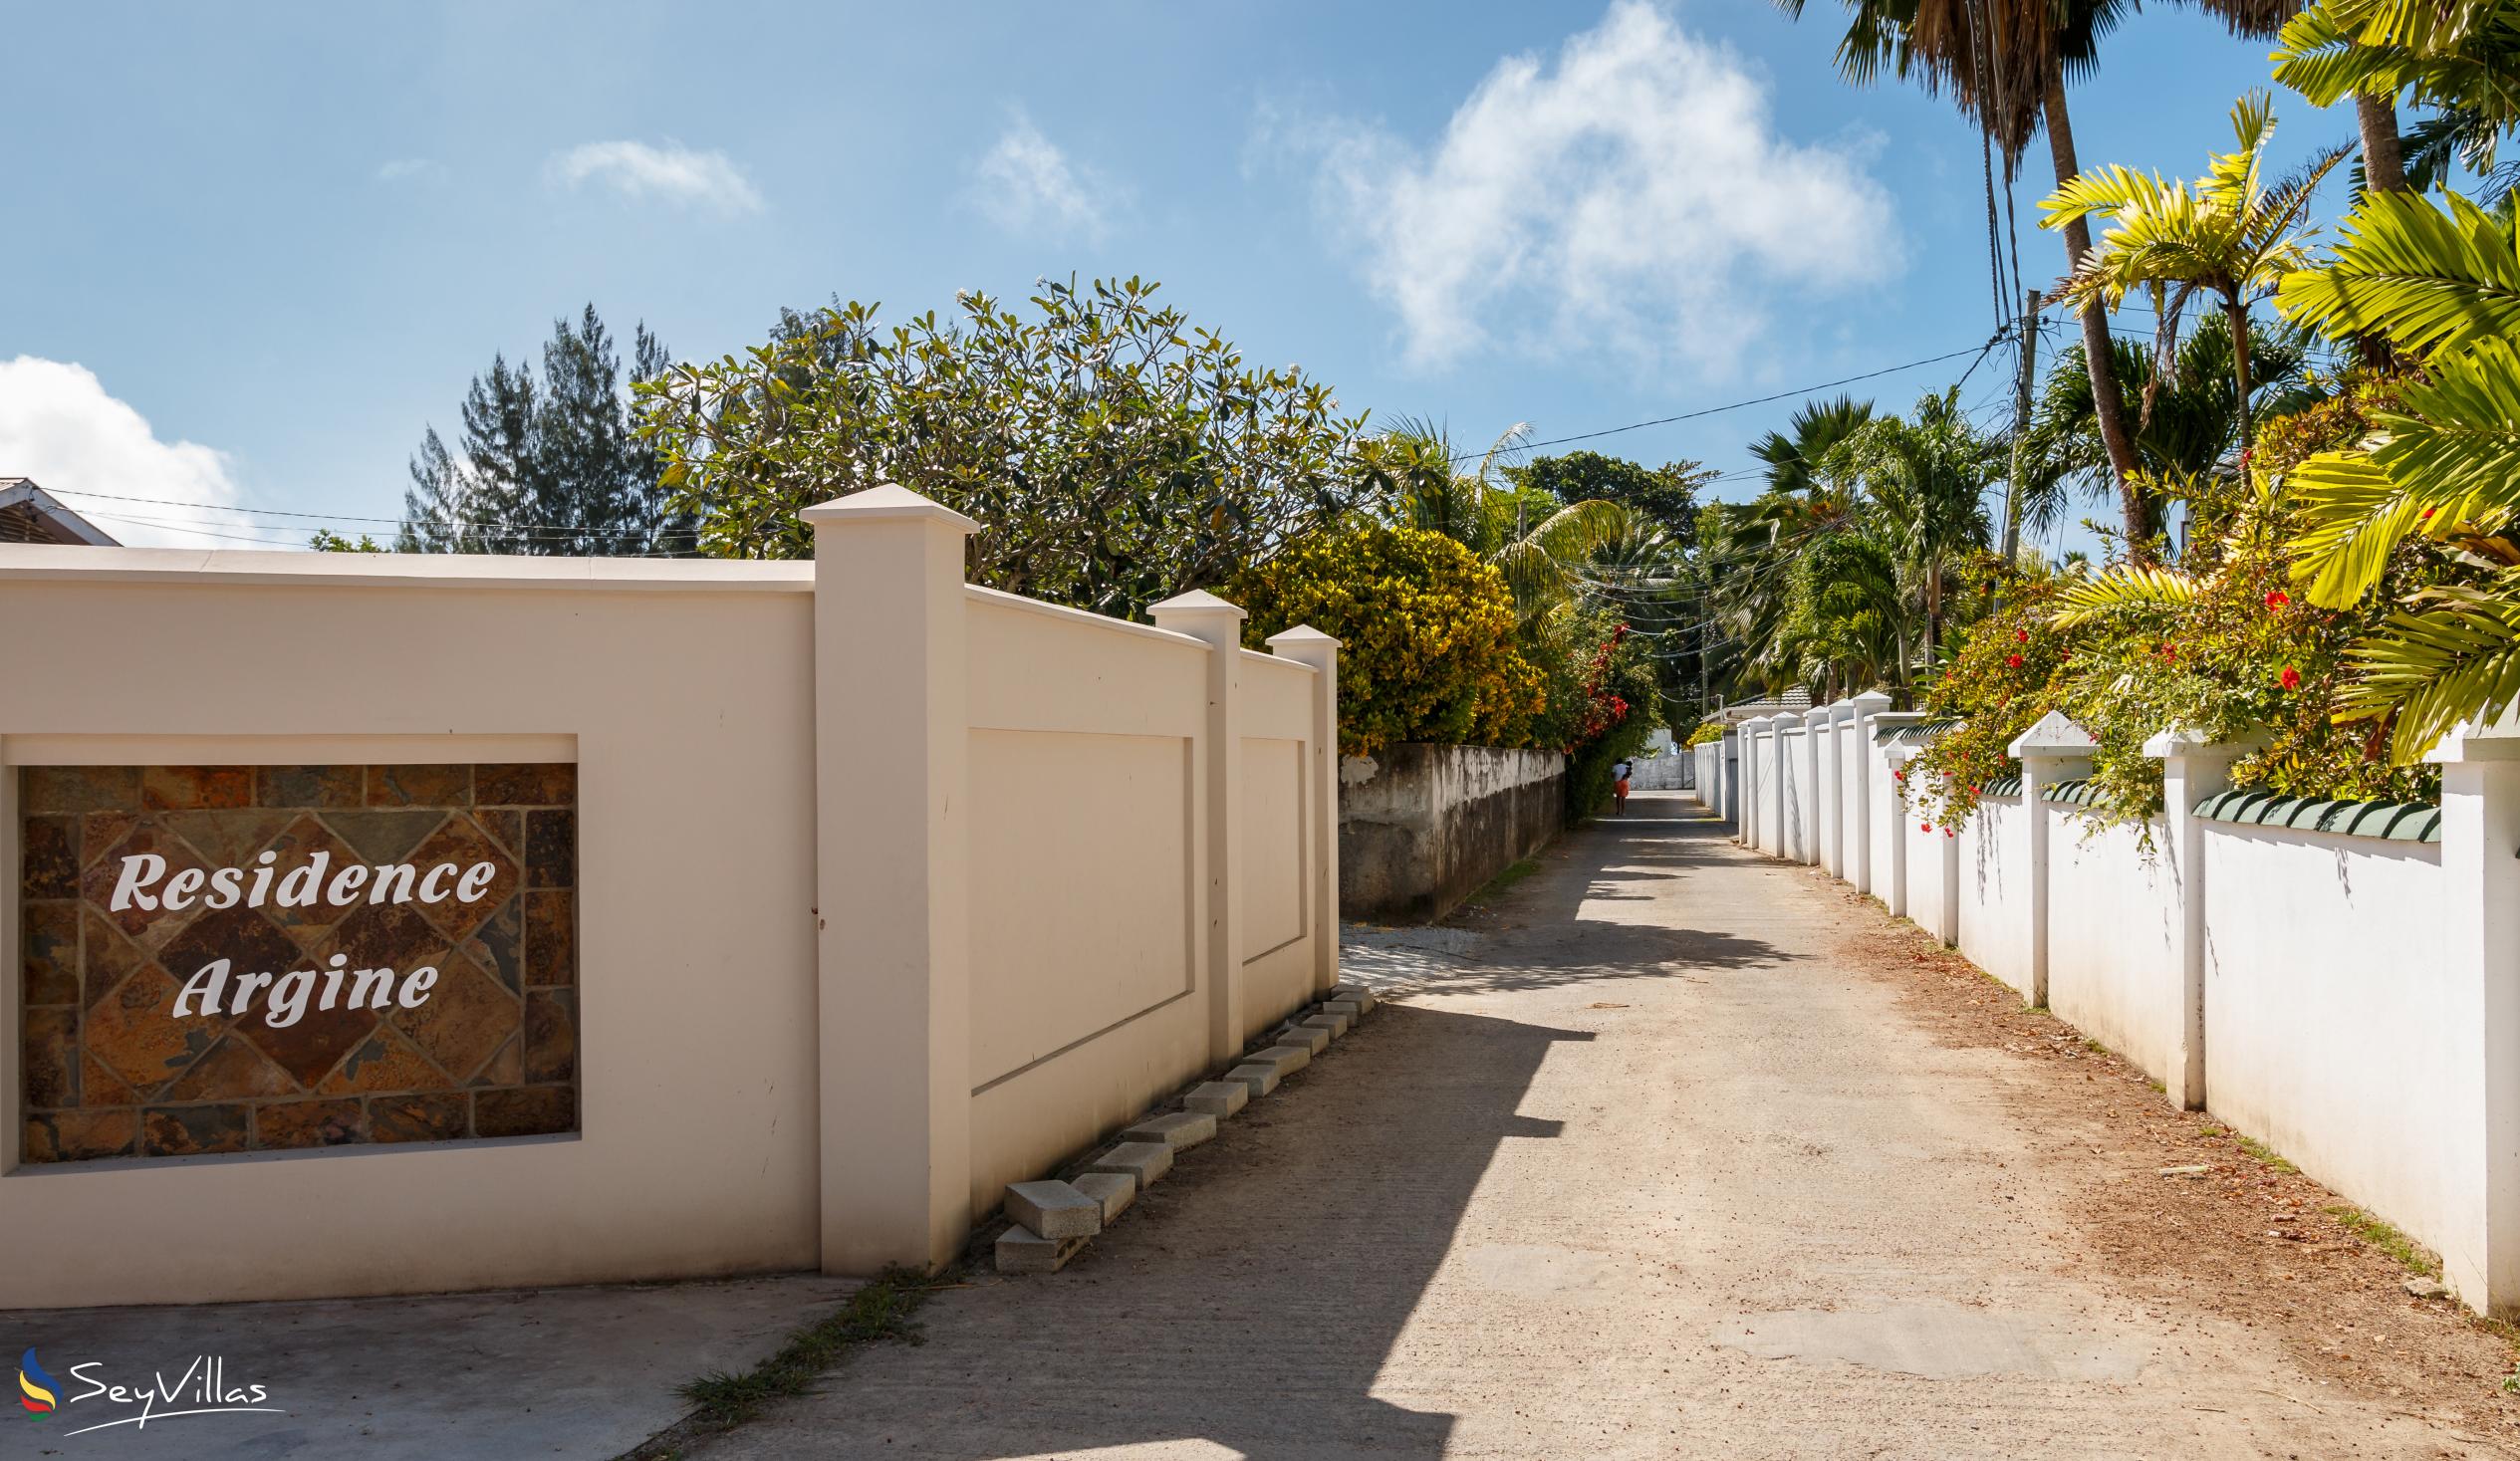 Foto 24: Residence Argine - Lage - Mahé (Seychellen)